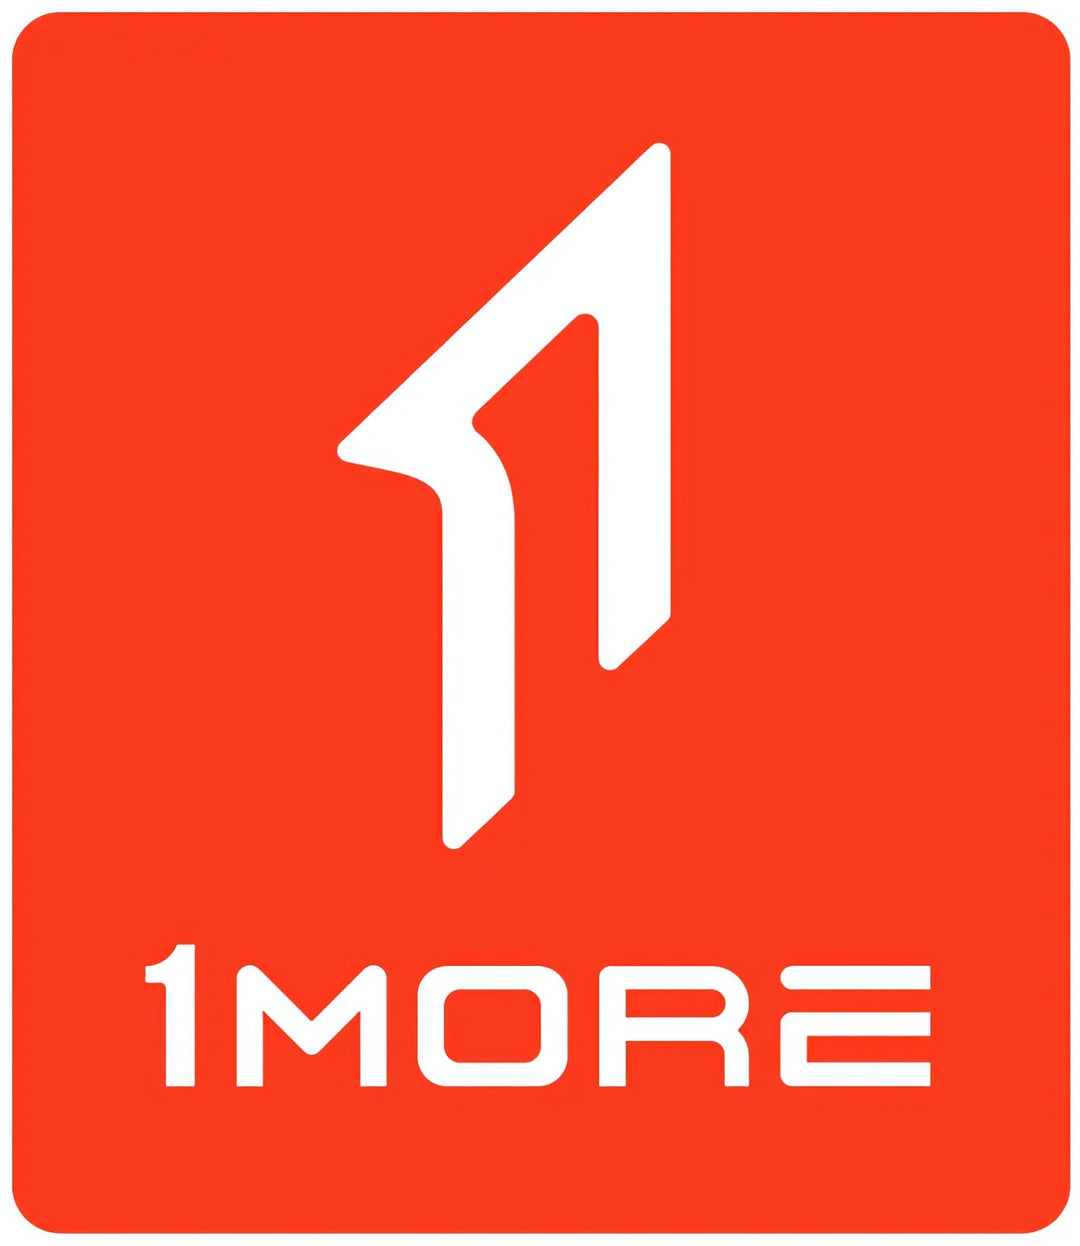 1MORE logo red